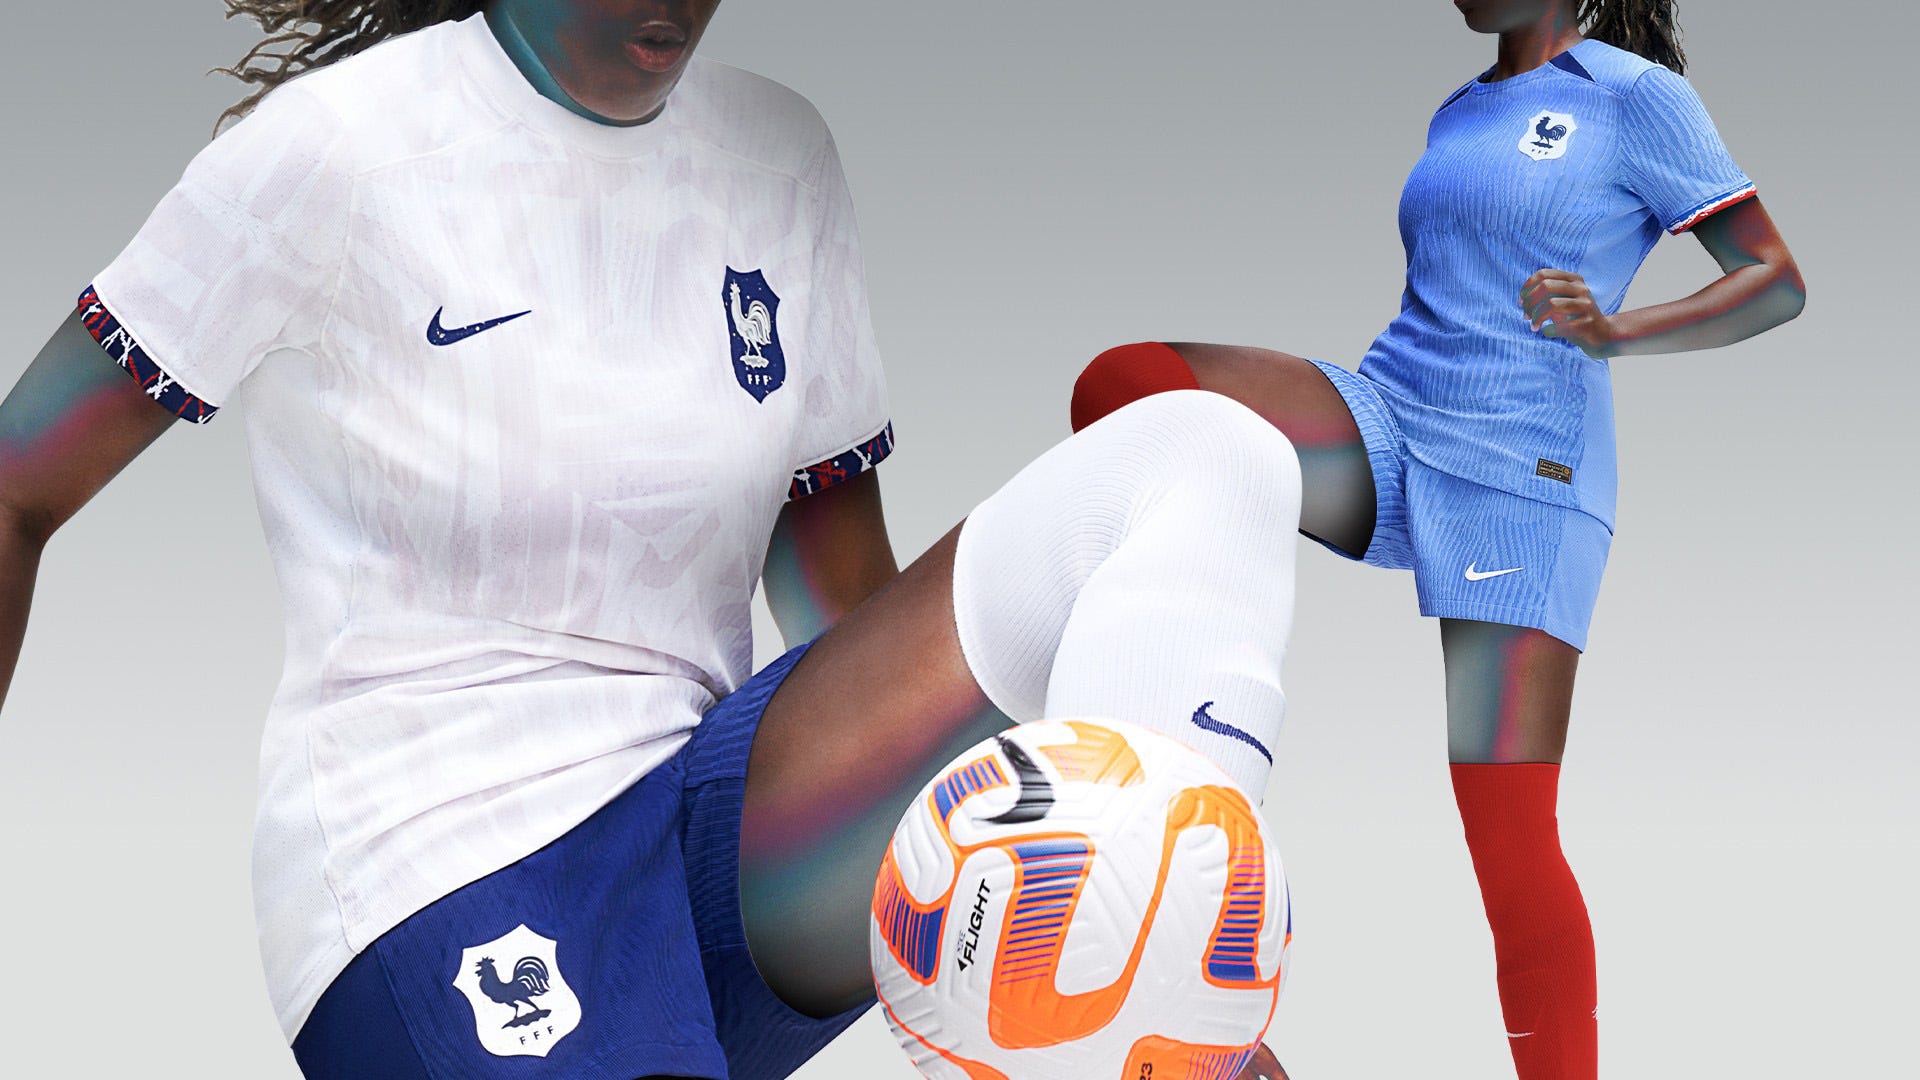 comedia Agente de mudanzas Repelente Nike release 2023 Women's World Cup away kits | Goal.com